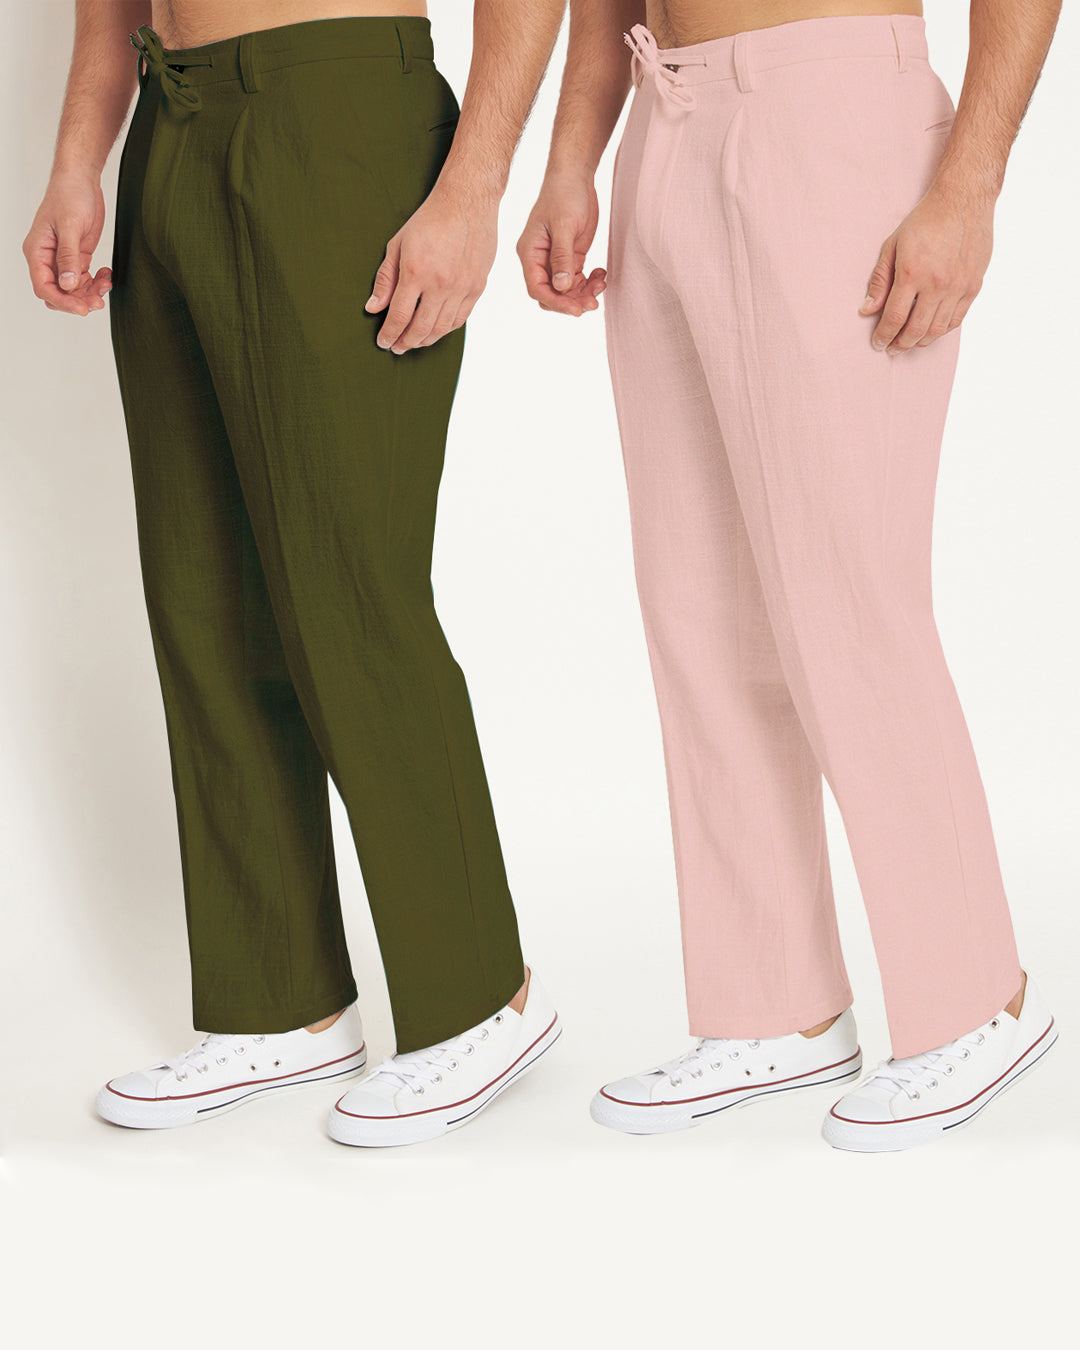 Combo: Casual Ease Fondant Pink & Olive Green Men's Pants - Set of 2